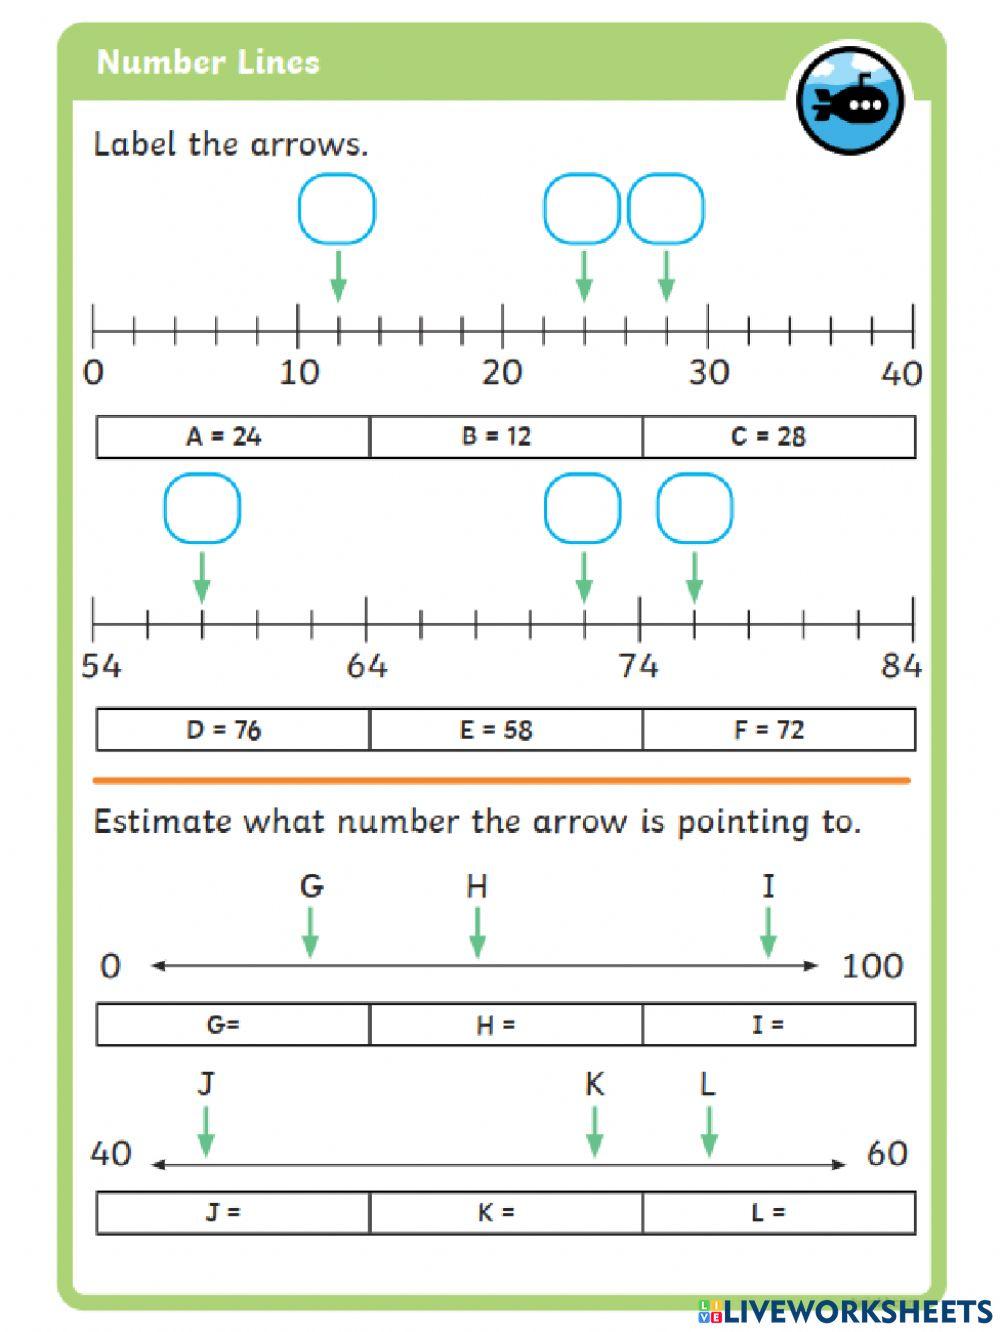 G2 - Number lines